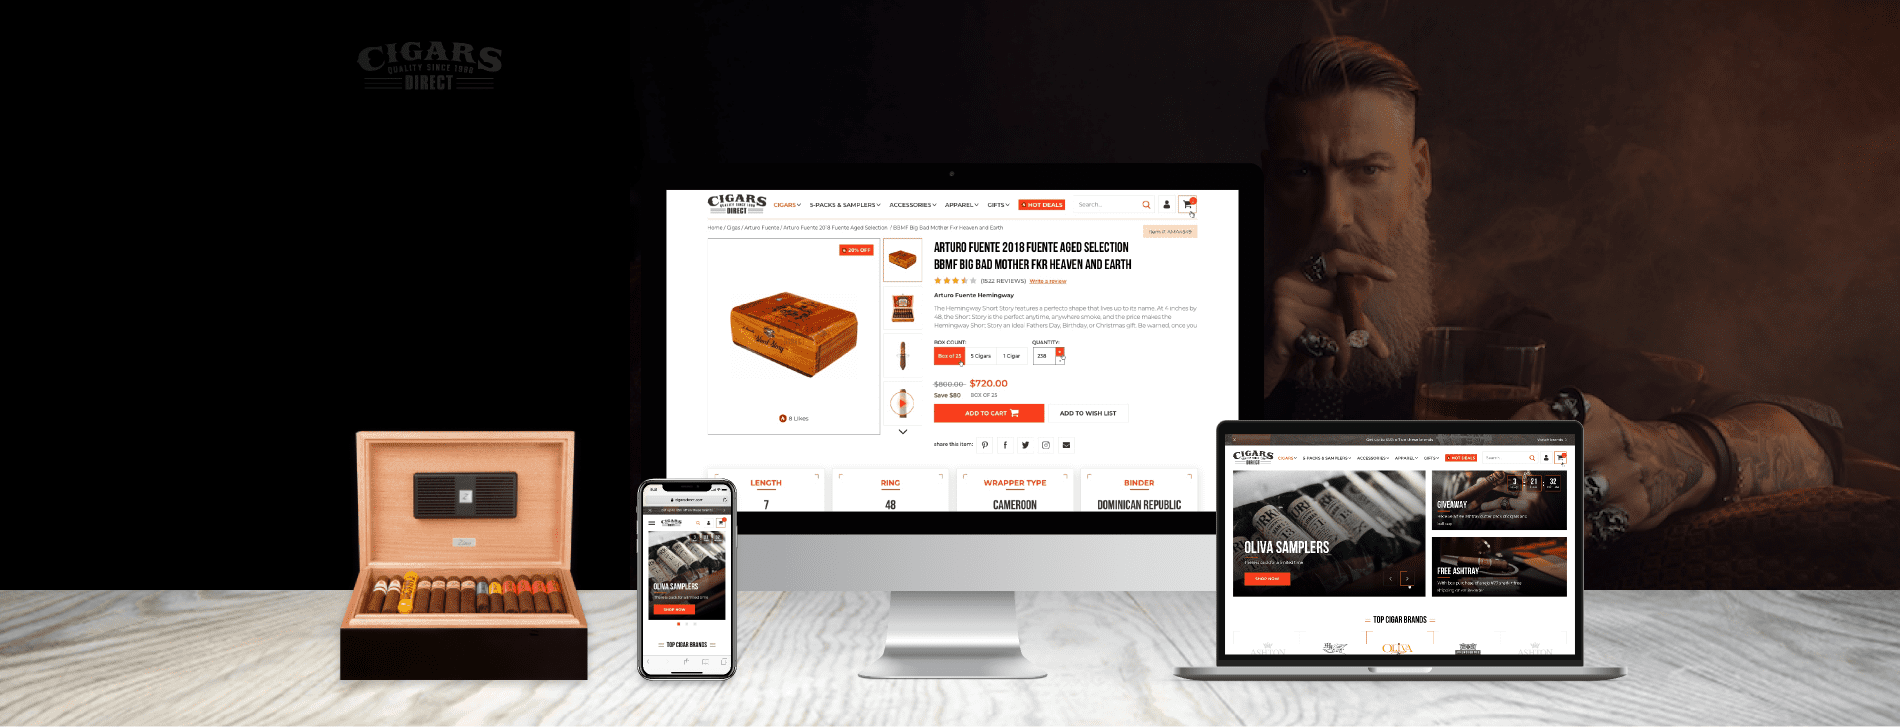 ecommerce digital marketing agency design for cigars direct